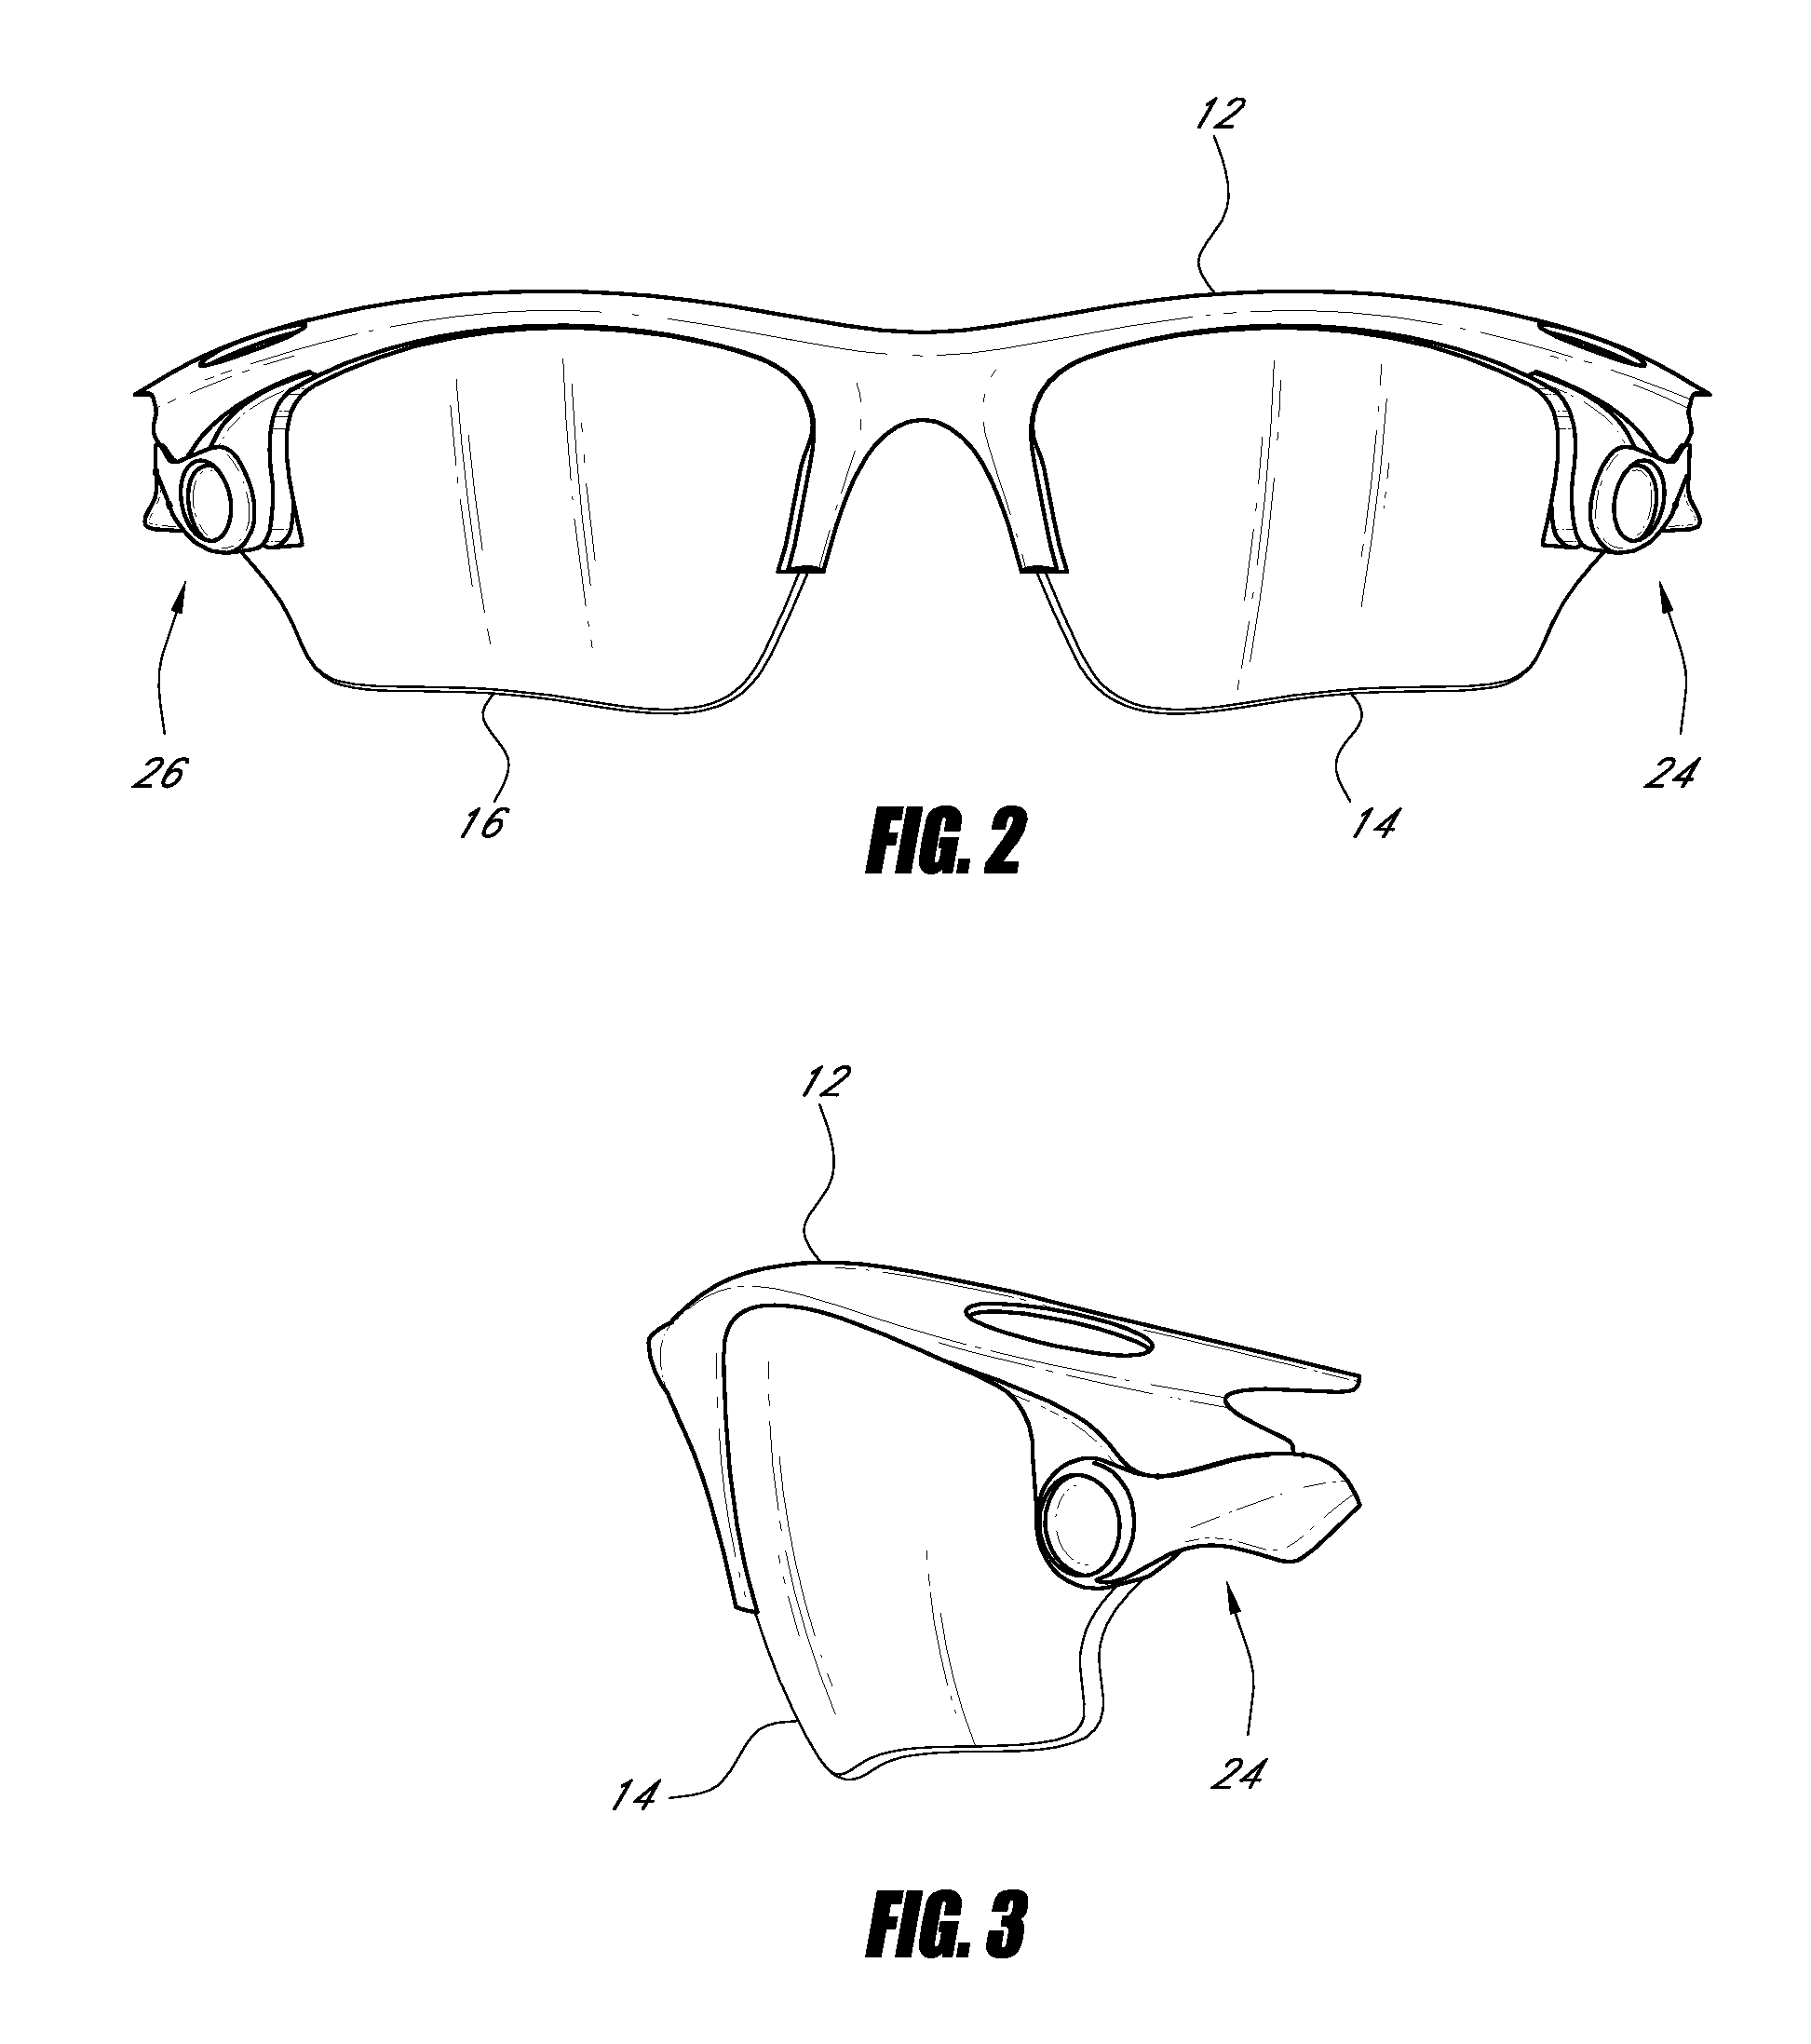 Eyewear with lens retention mechanism